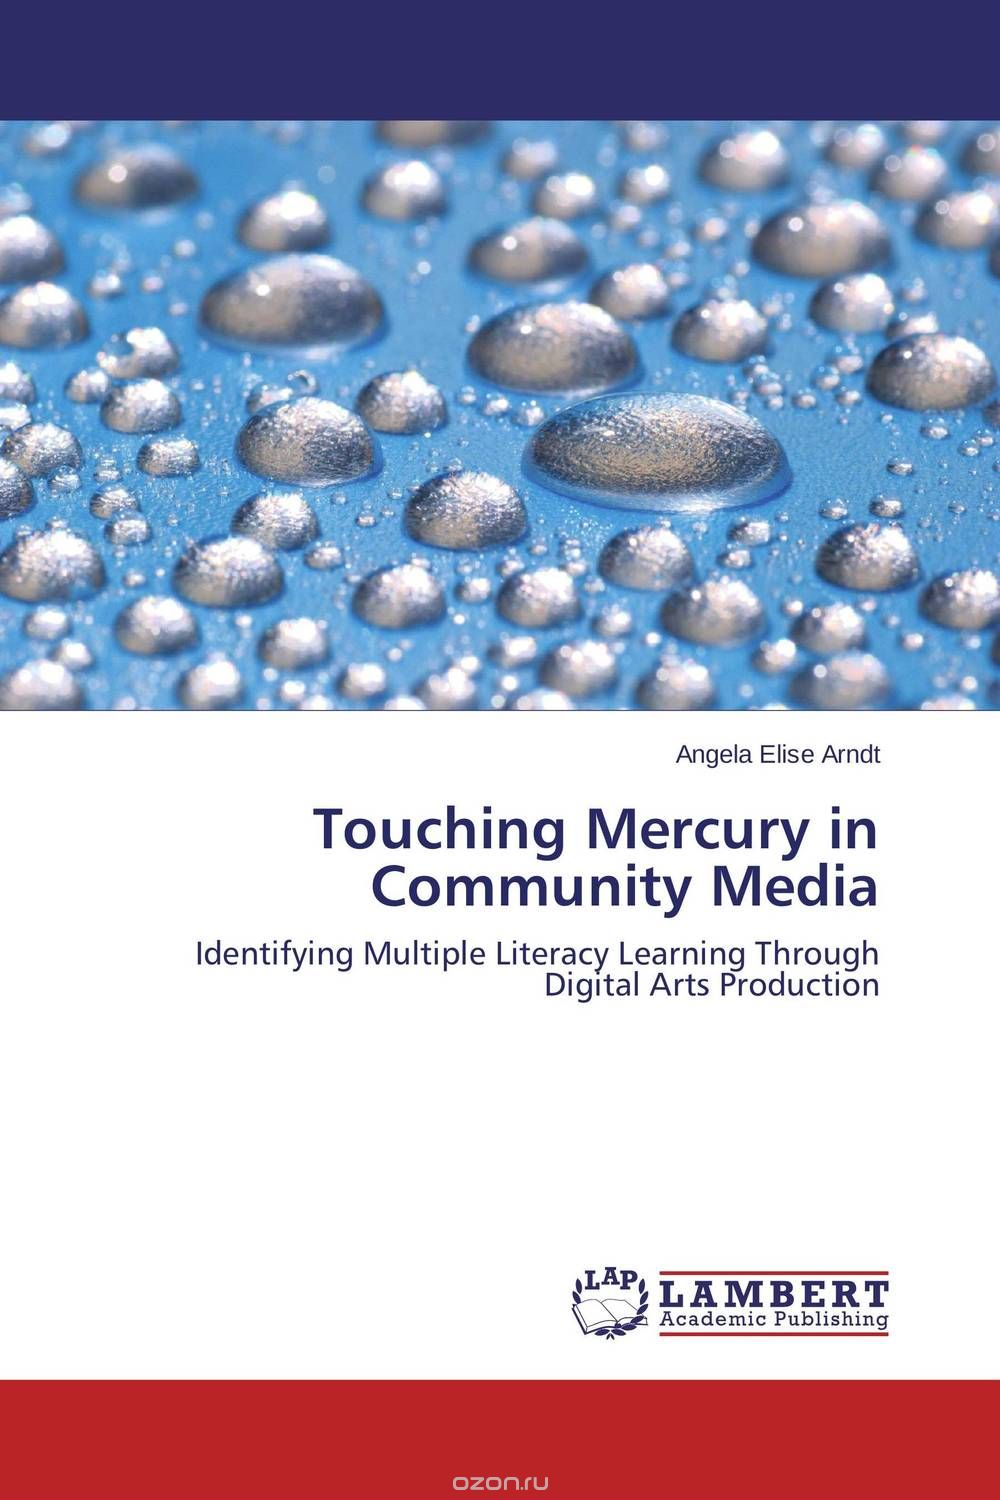 Скачать книгу "Touching Mercury in Community Media"